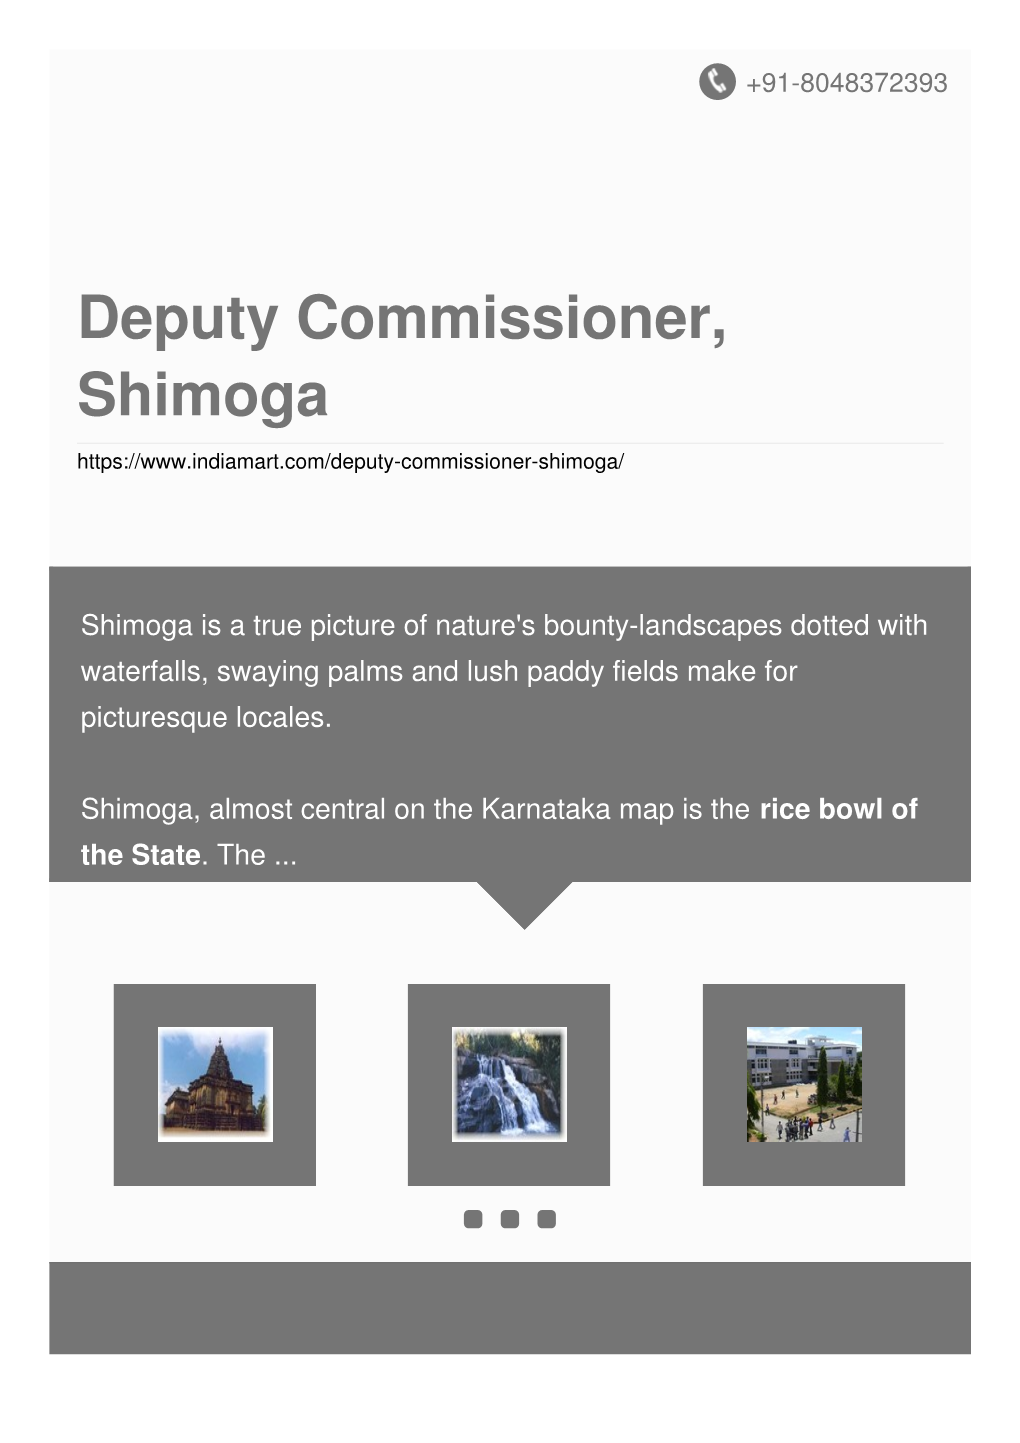 Deputy Commissioner, Shimoga